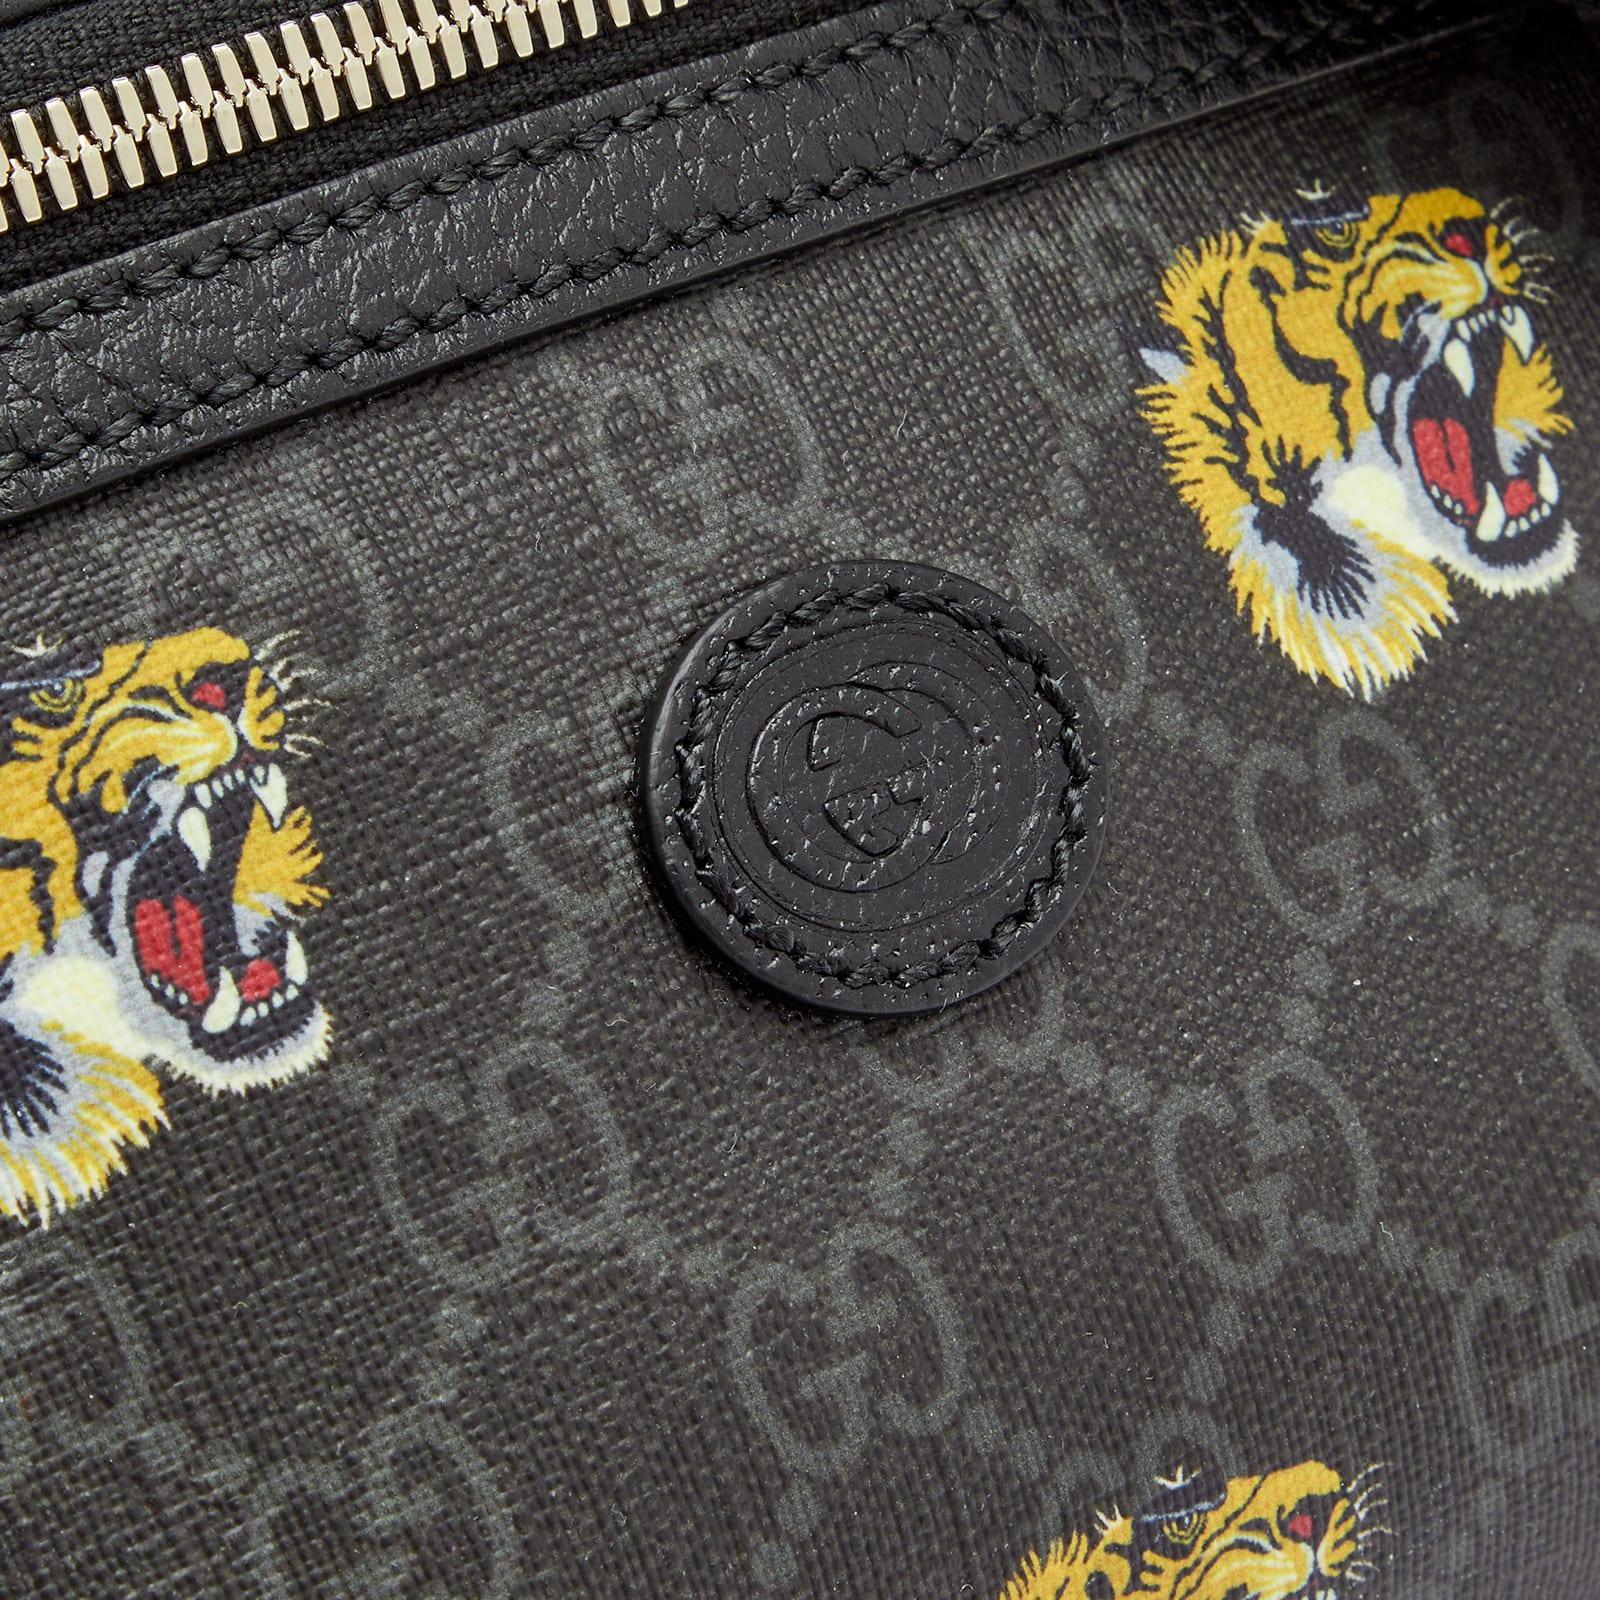 Gucci Tiger GG Belt Bag Beige/Ebony